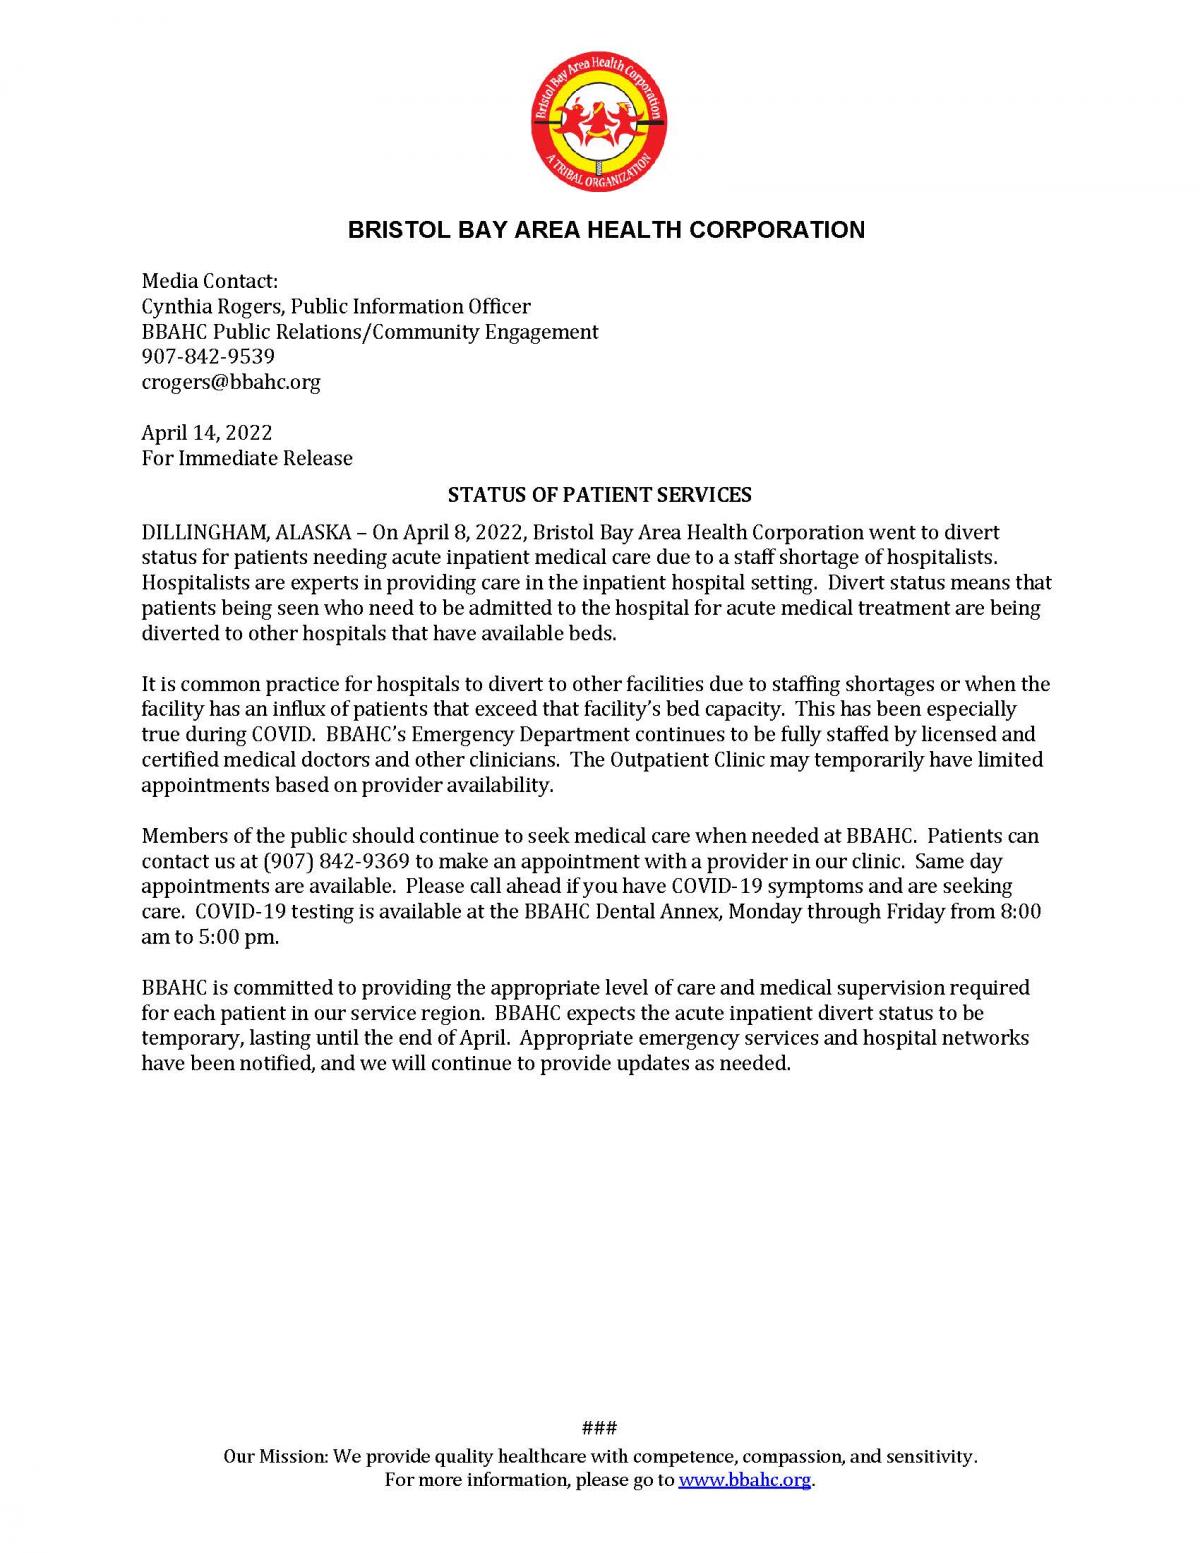 April 14, 2022 Bristol Bay Area Health Corporation Press Release